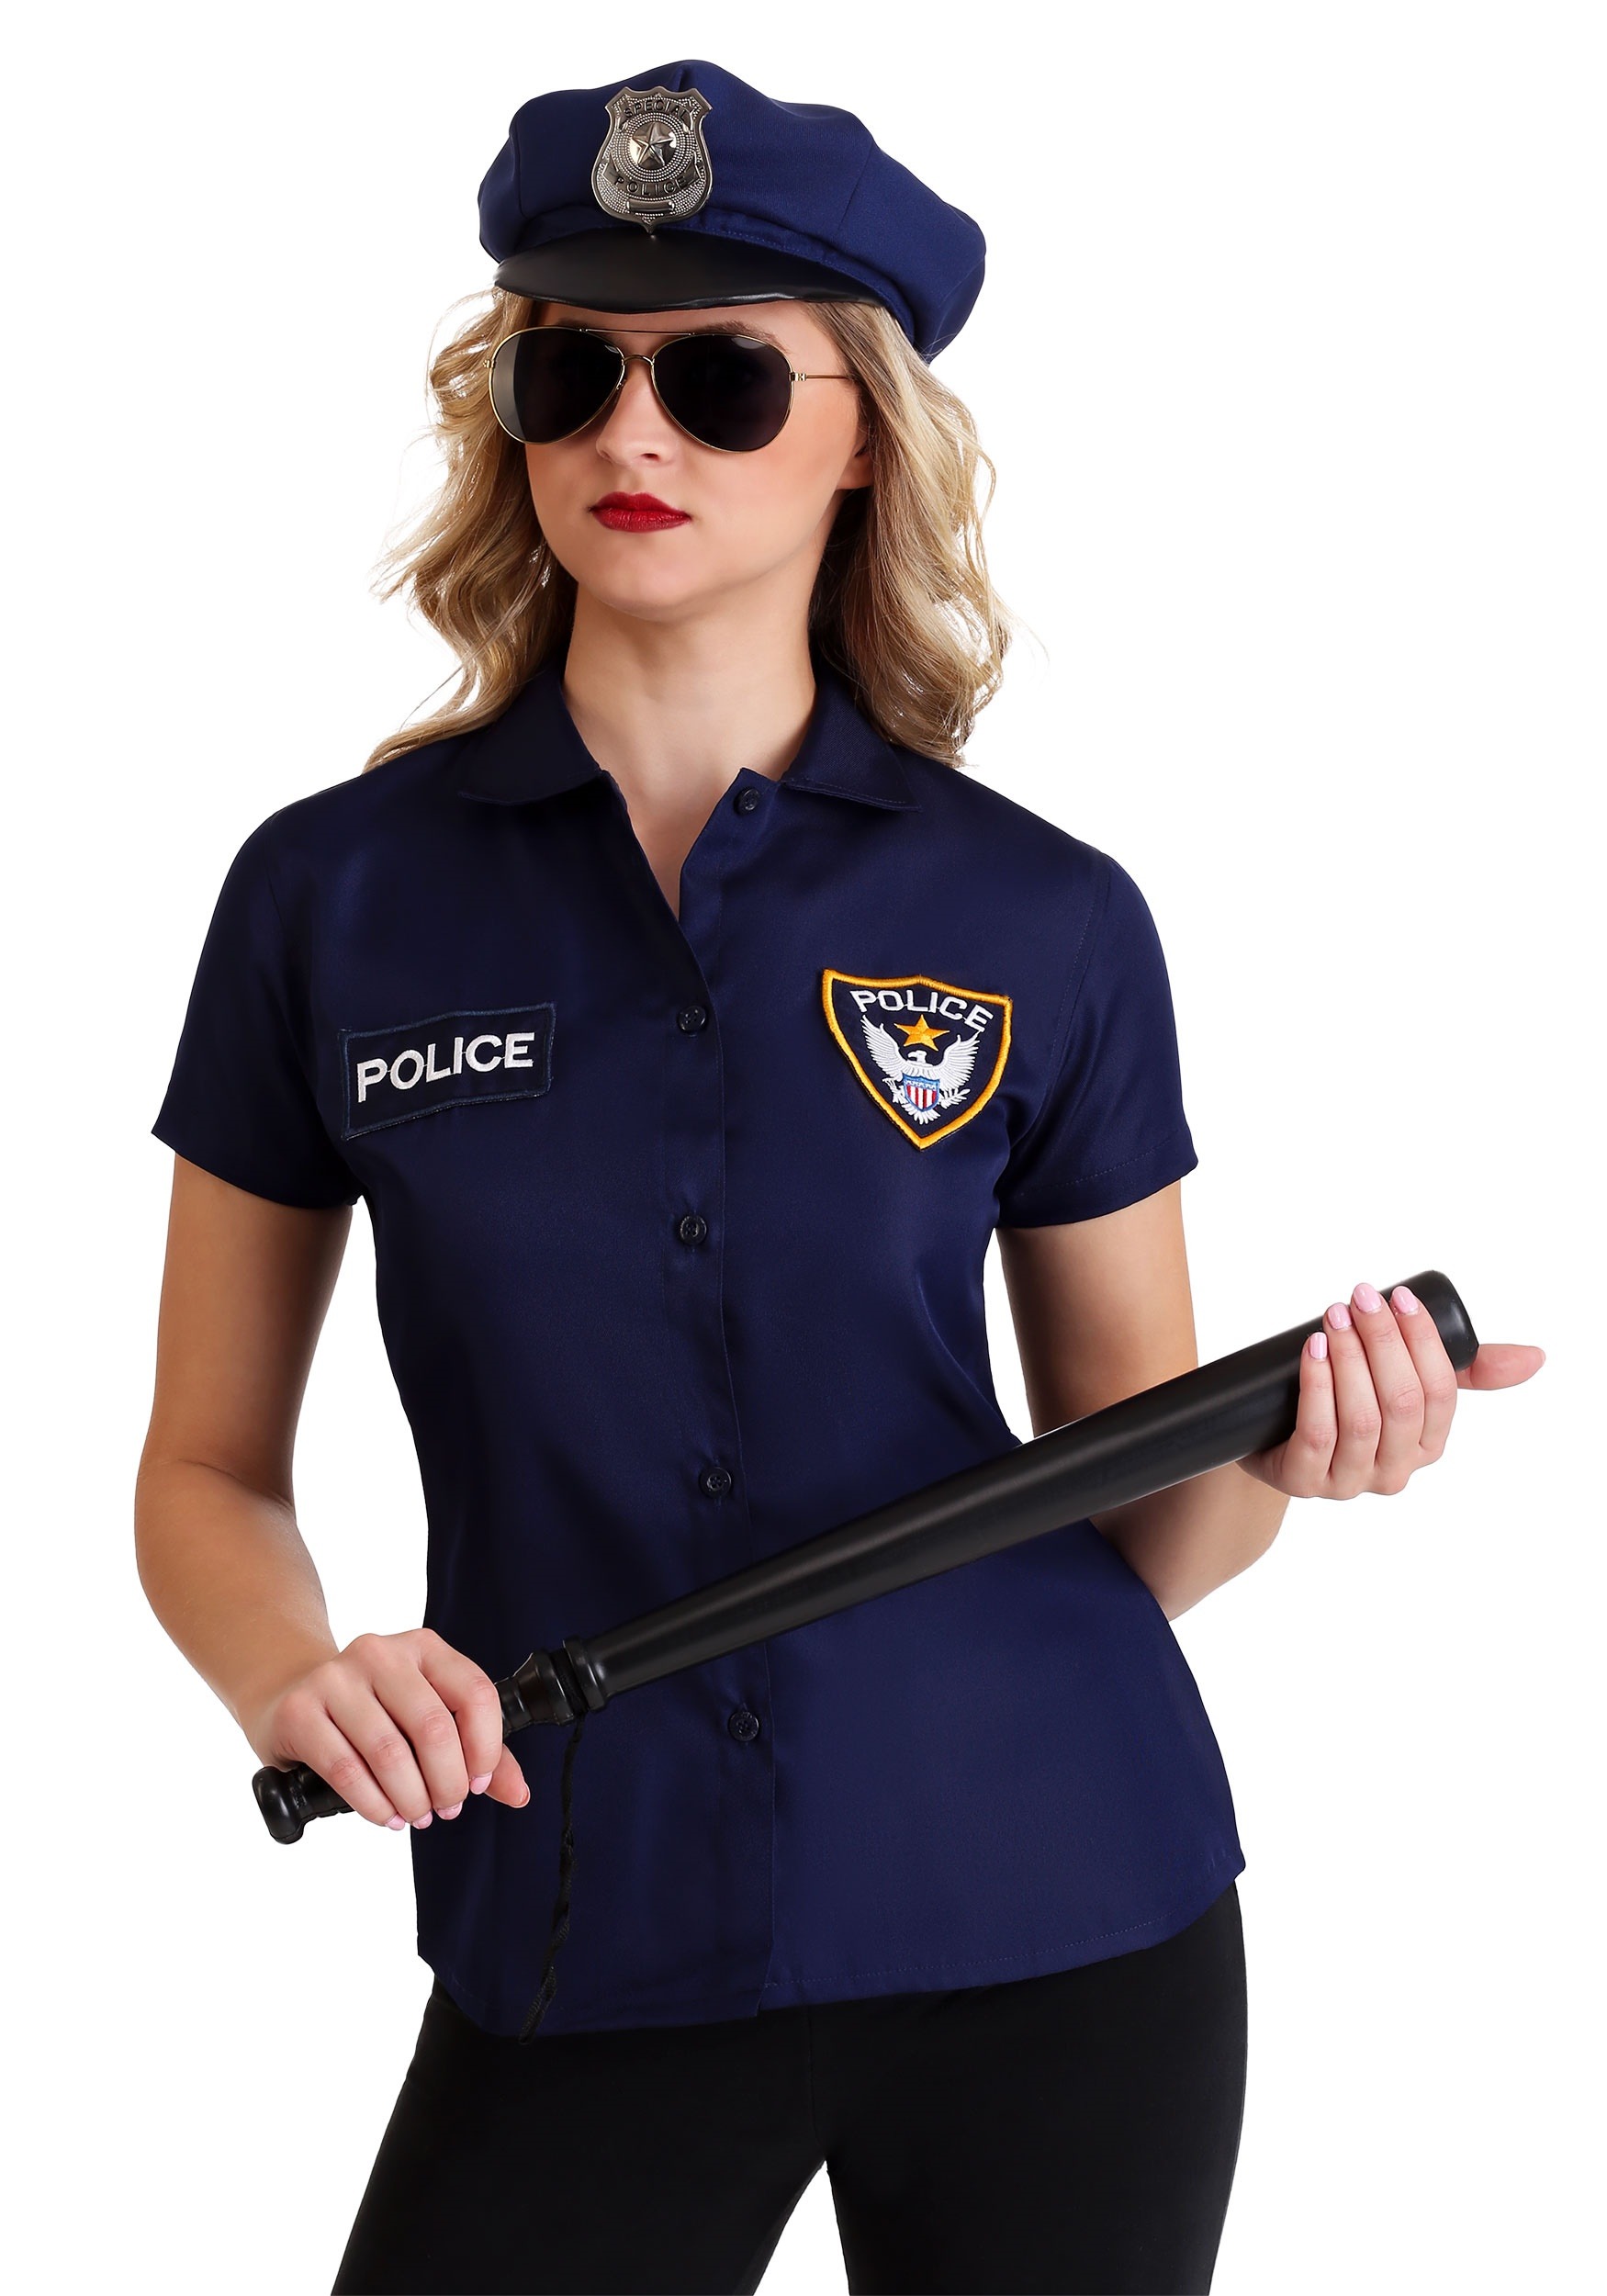 Women’s Plus Size Police Shirt Costume